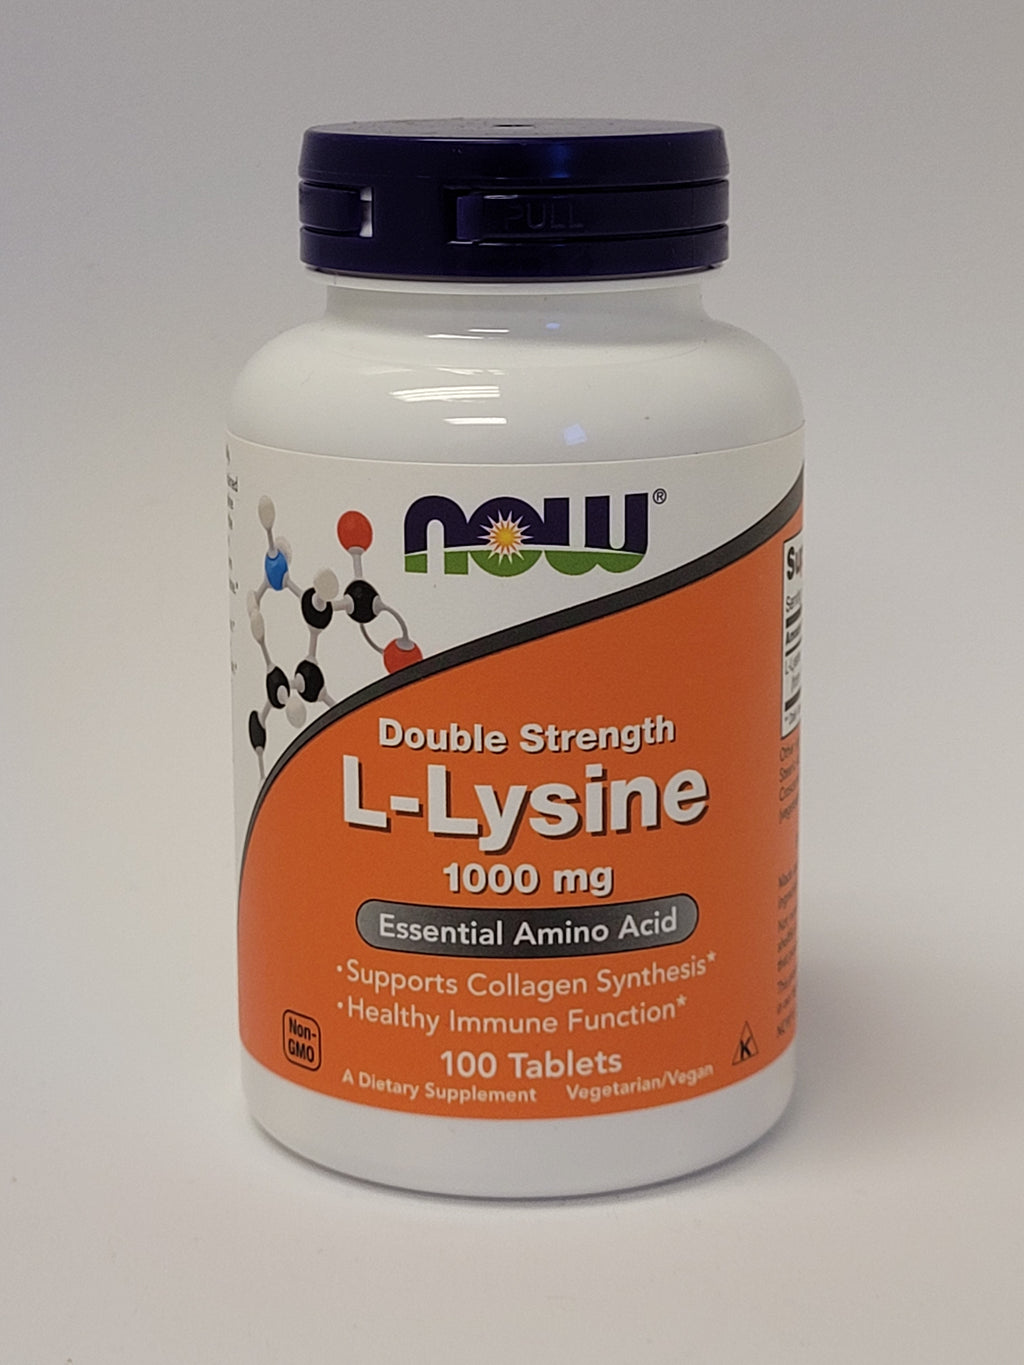 L-Lysine Double Strength